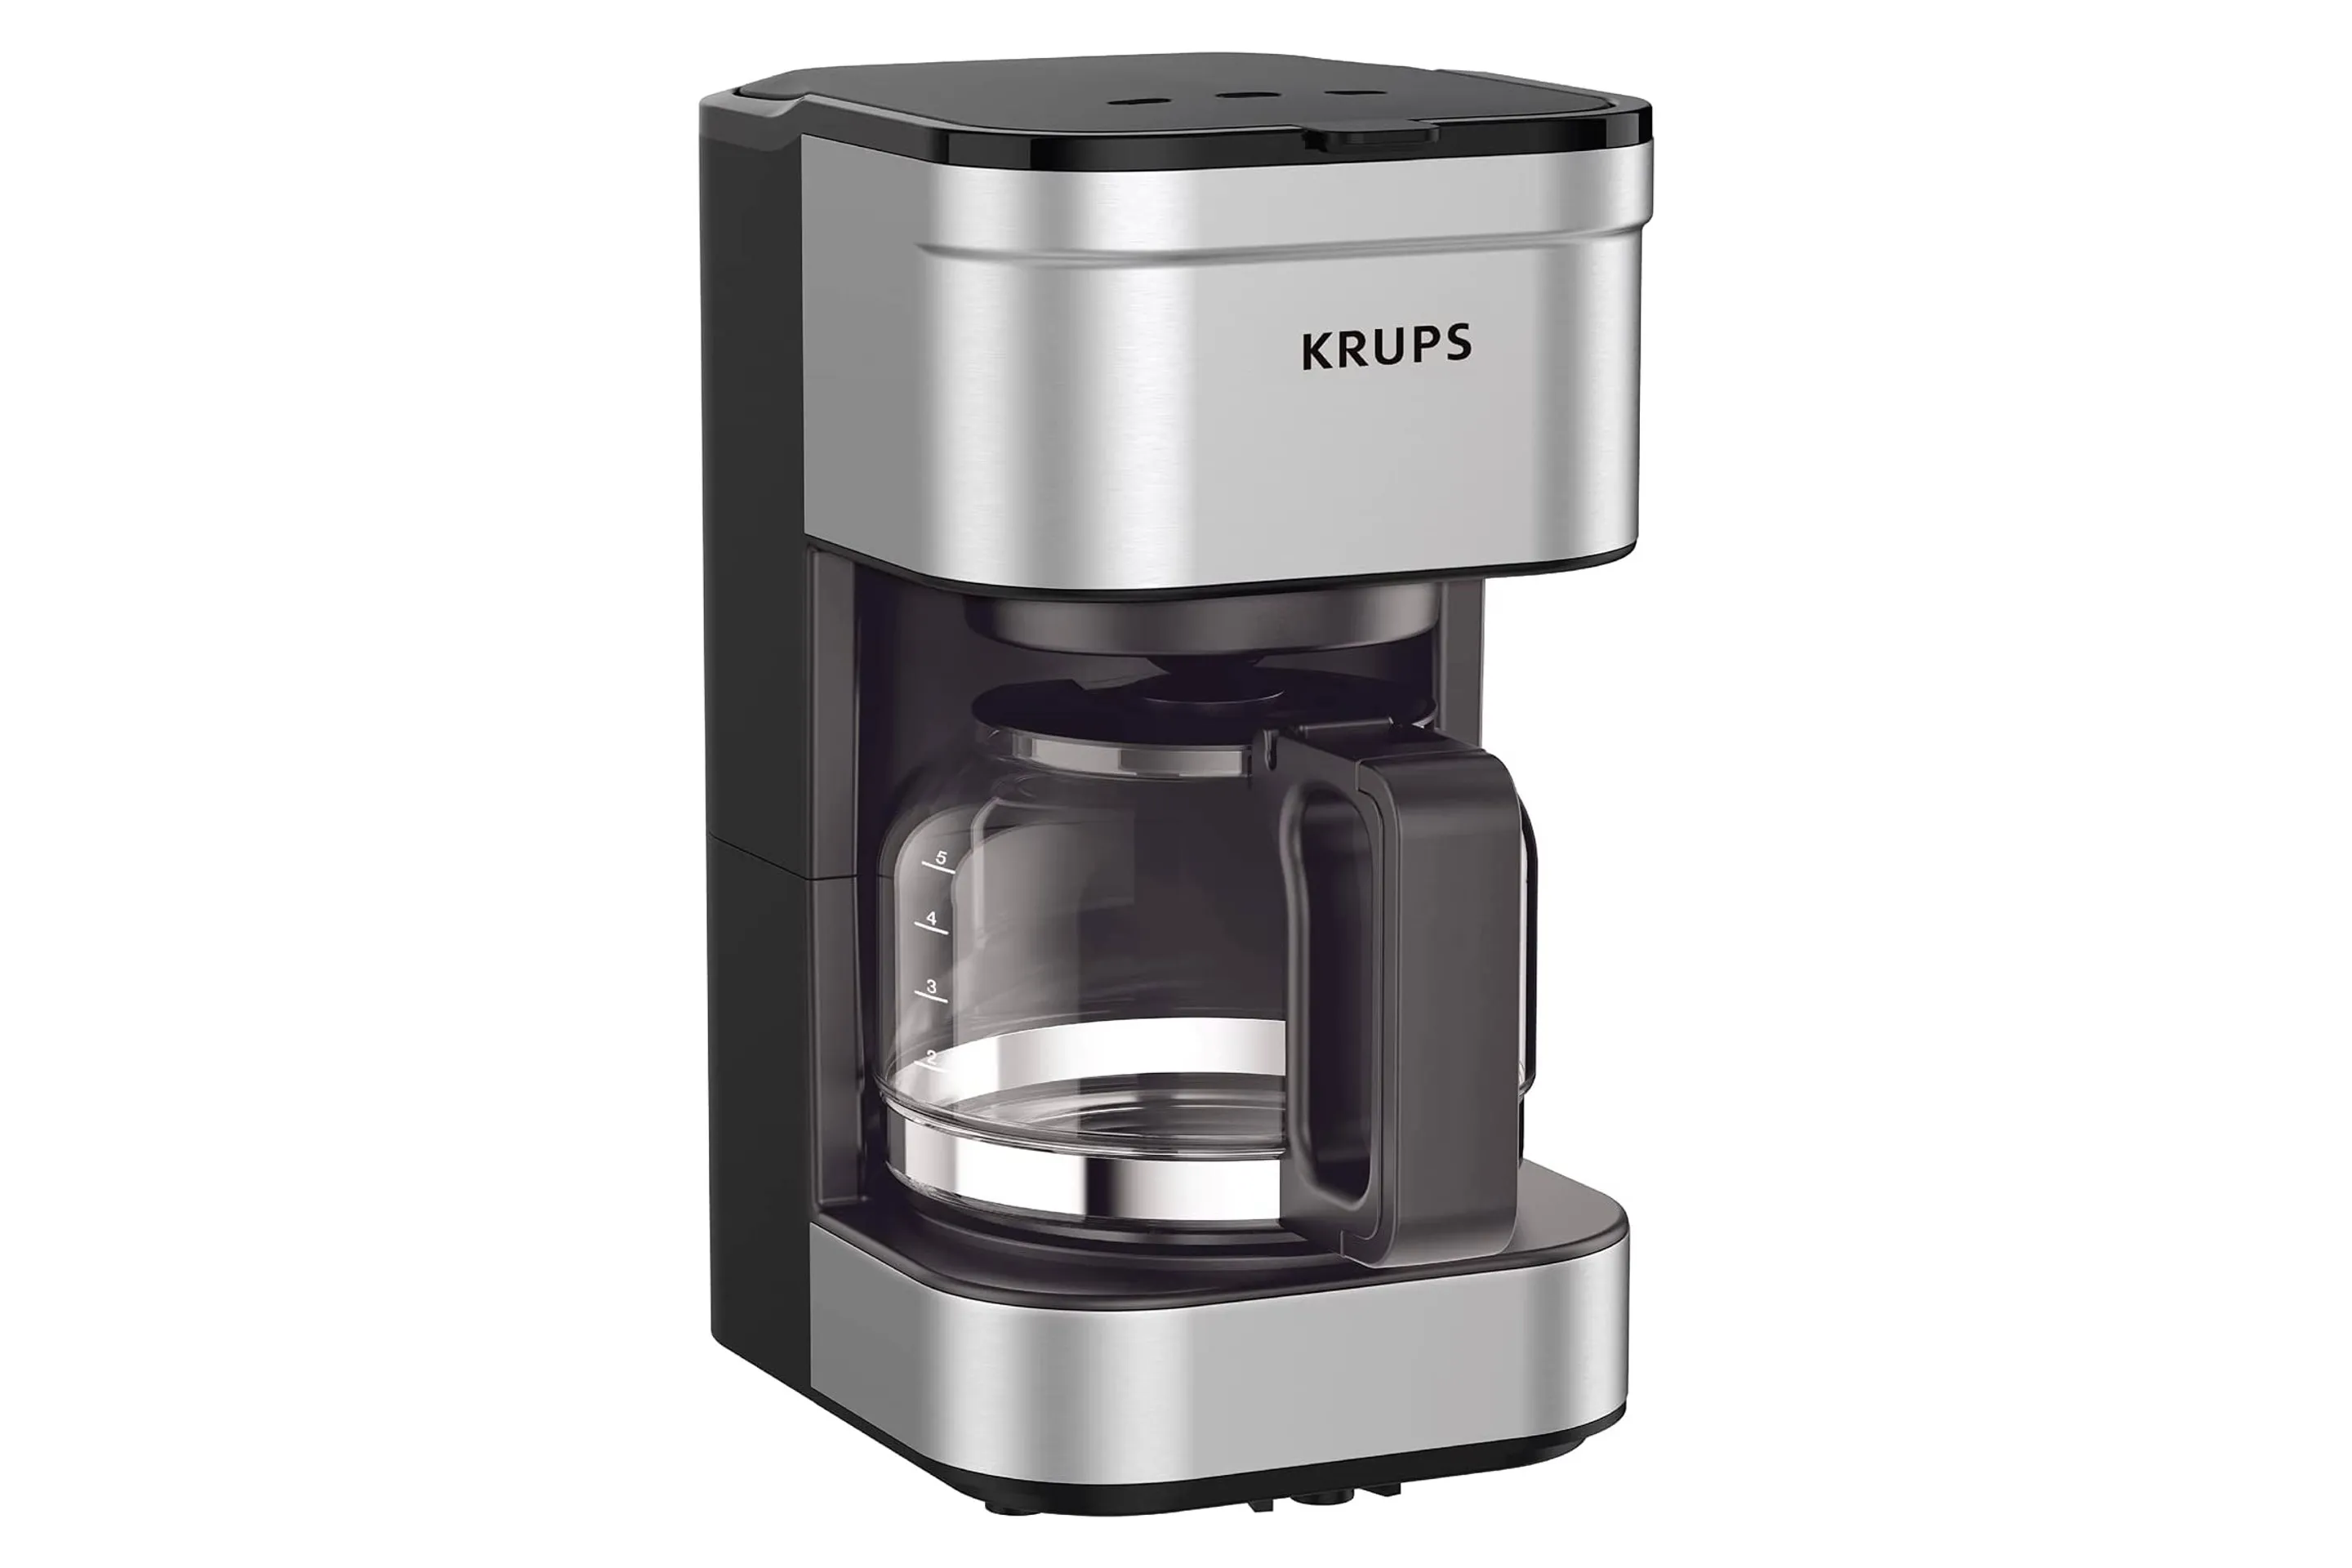 https://img.money.com/2022/11/Shopping-Krups-Simply-Brewed-Coffee-Maker.jpg